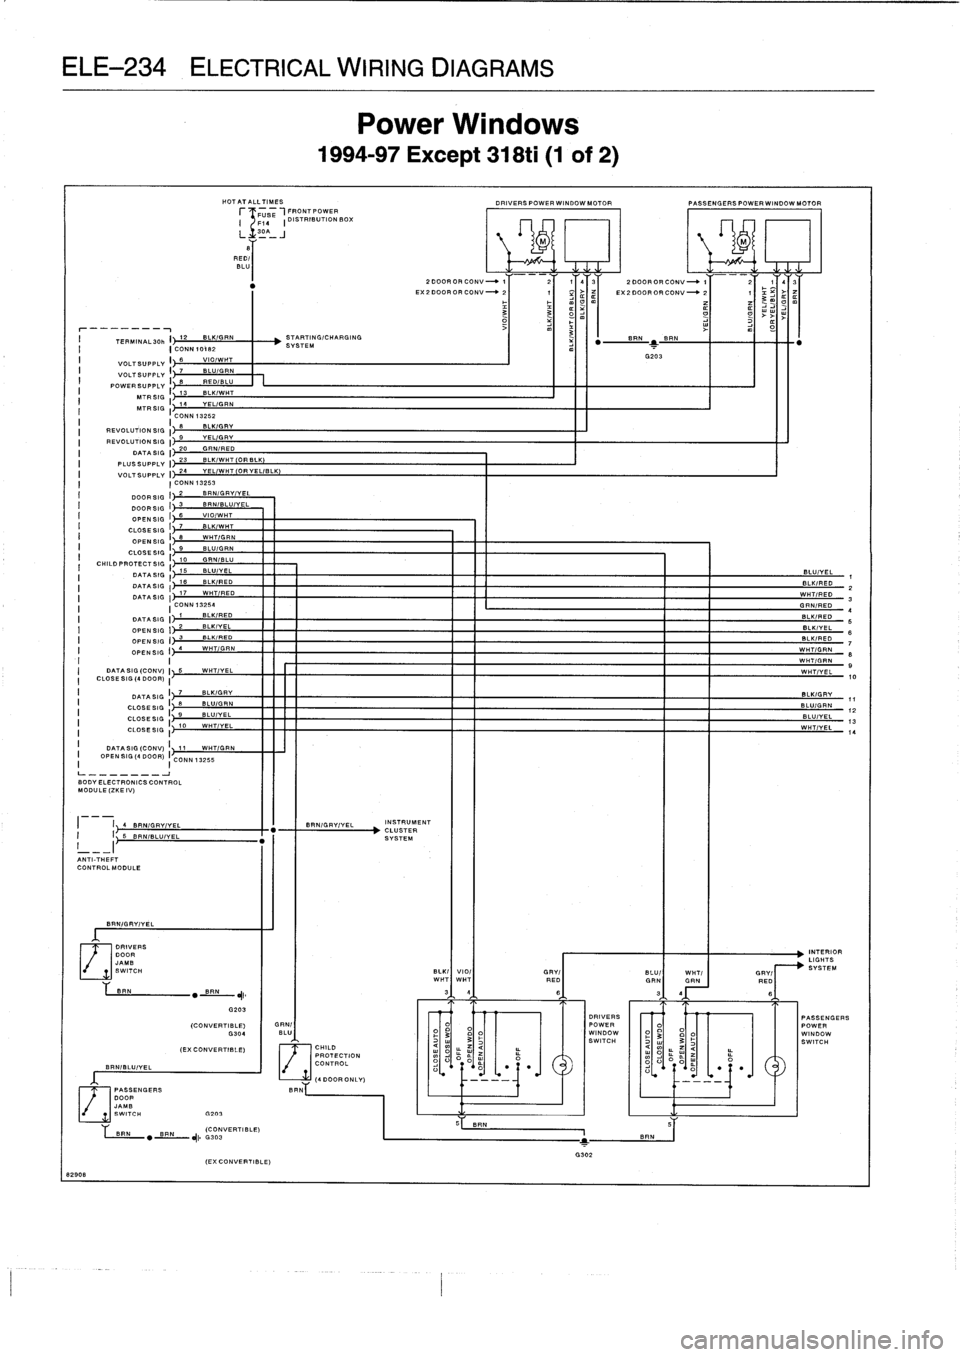 BMW 328i 1994 E36 Workshop Manual 
ELE-234
ELECTRICAL
WIRING
DIAGRAMS

82908

L
1
3
--J
8
RED/
BLU

I

	

TERMINAL30H
I
12

	

BLKIGRN

	

STARTING/CHARGING
I

	

ICONN10182

	

SYSTEM

BLK/GRV
REVOLUTIONSIG
I~
~
9
REVOLUTIONSIG
I)
-
